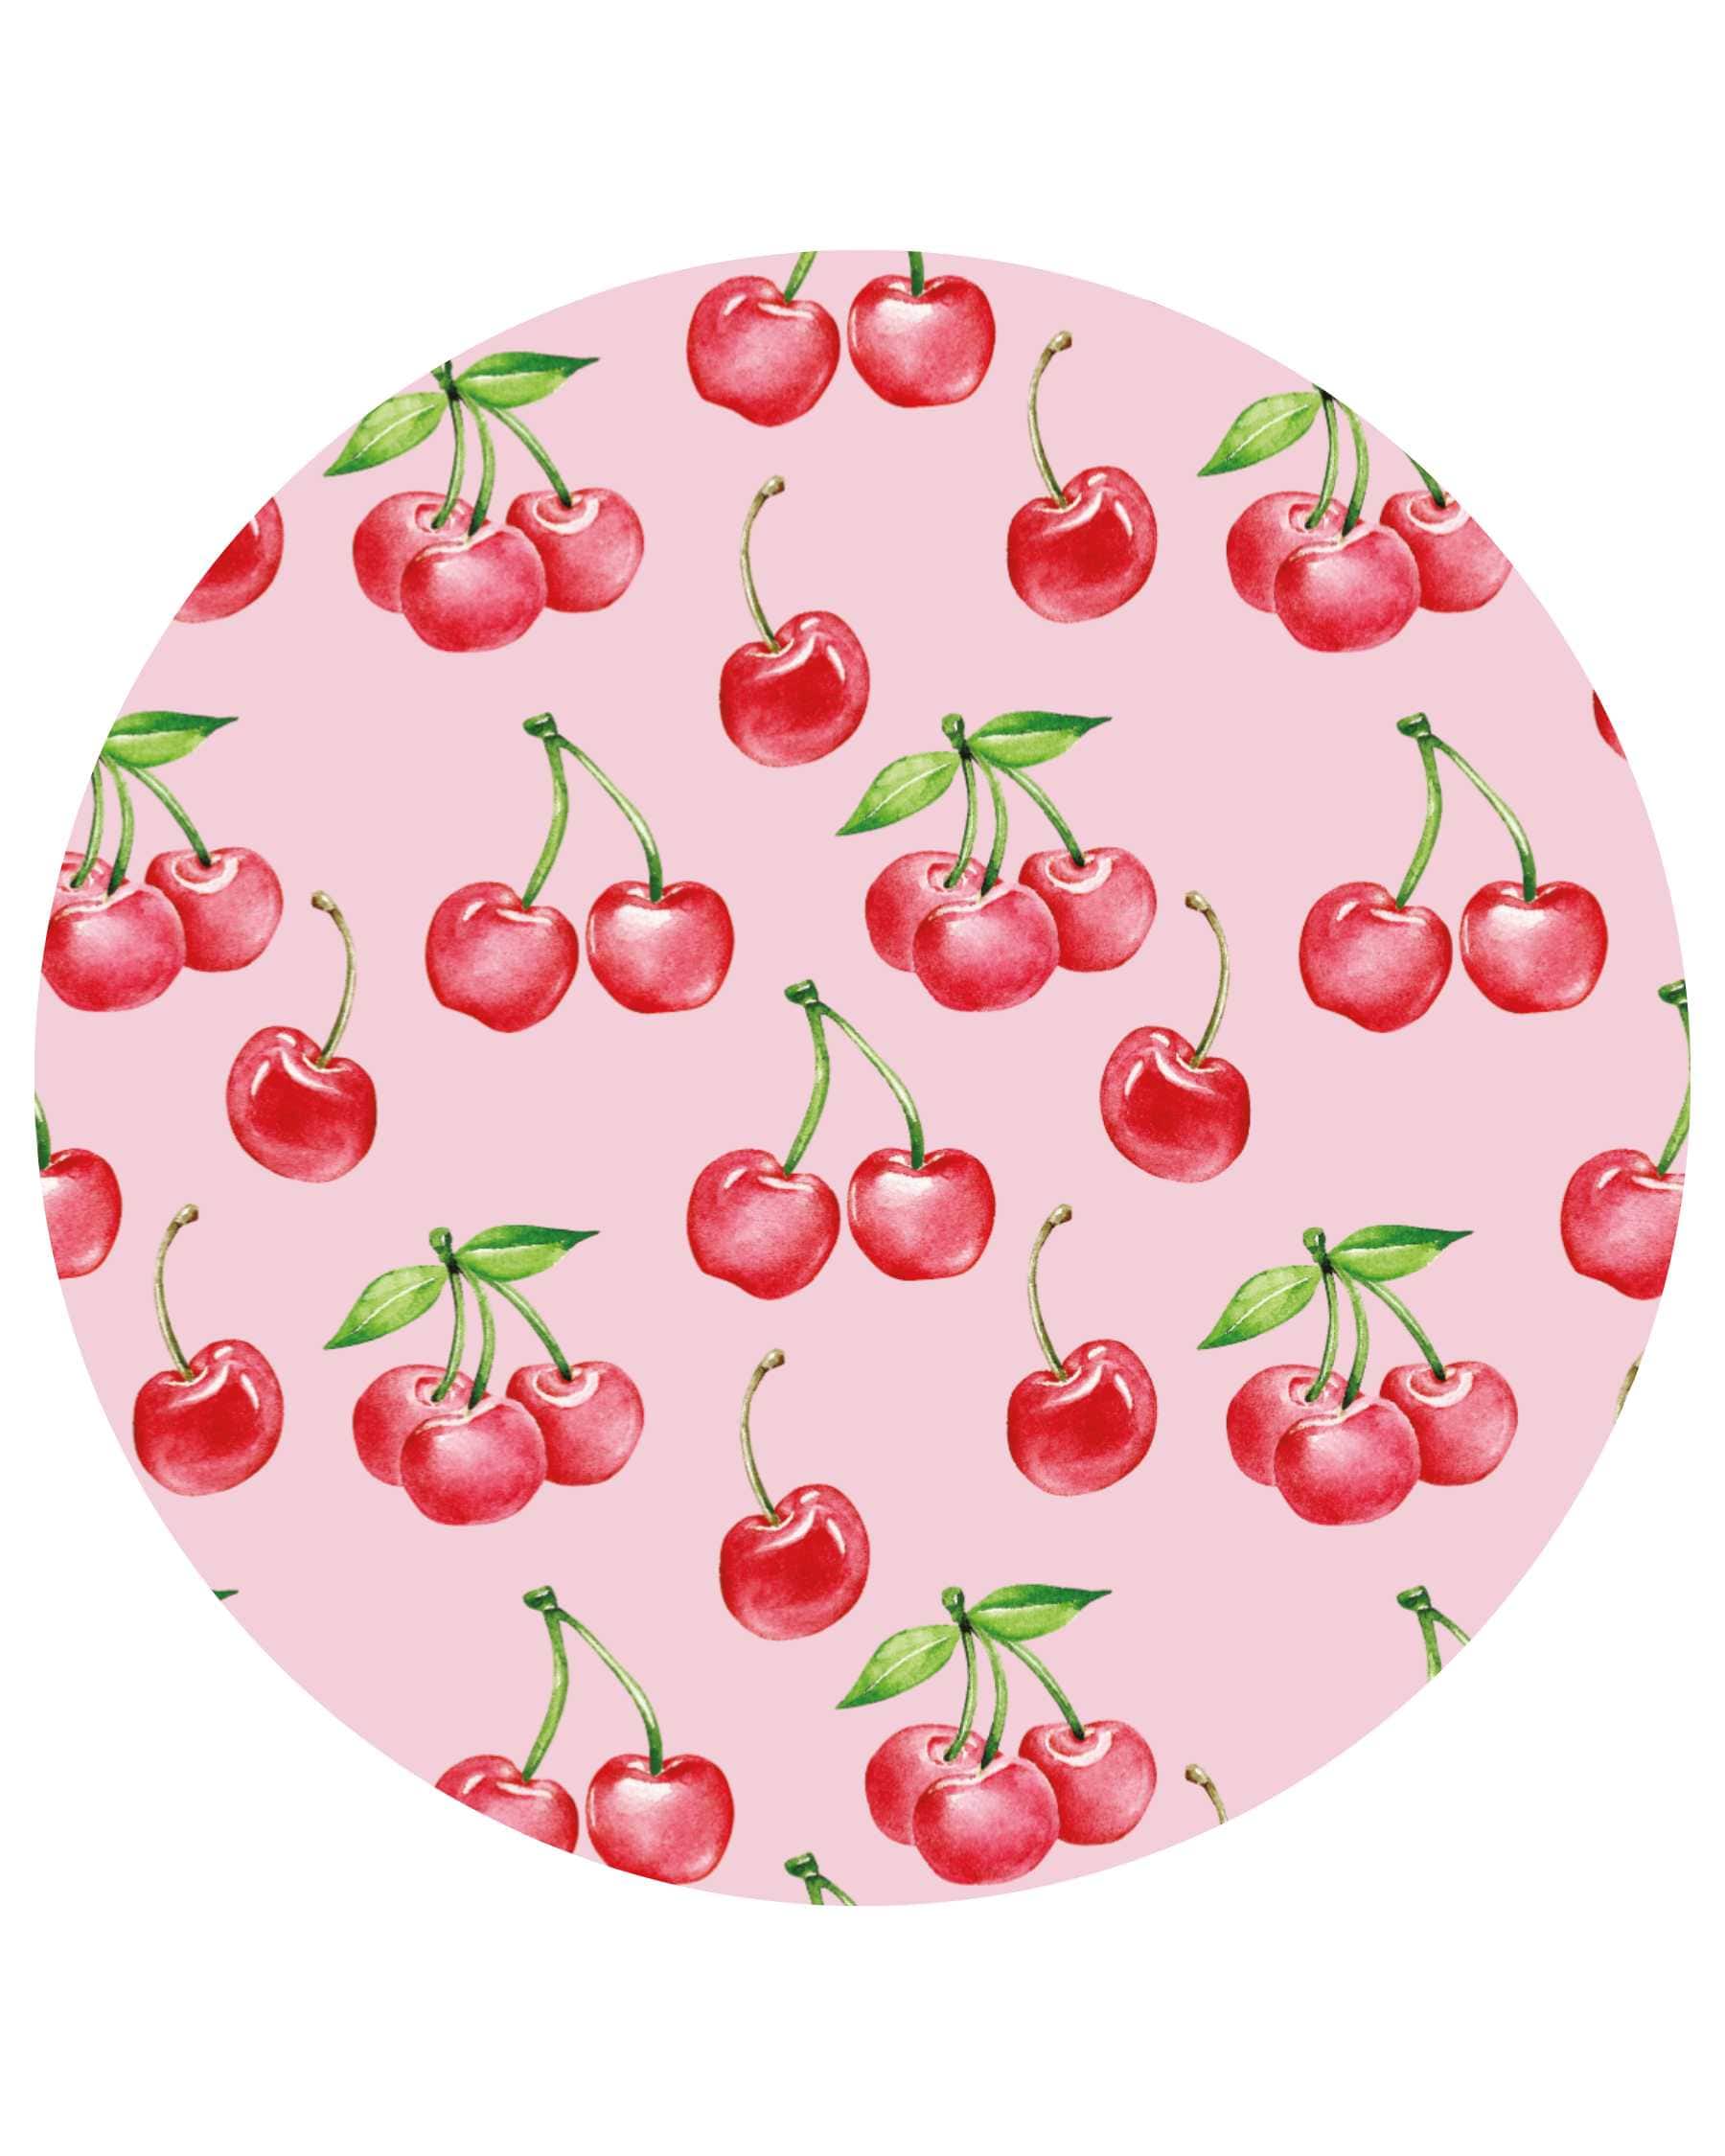 Cherry Pillowcases: Set of 2